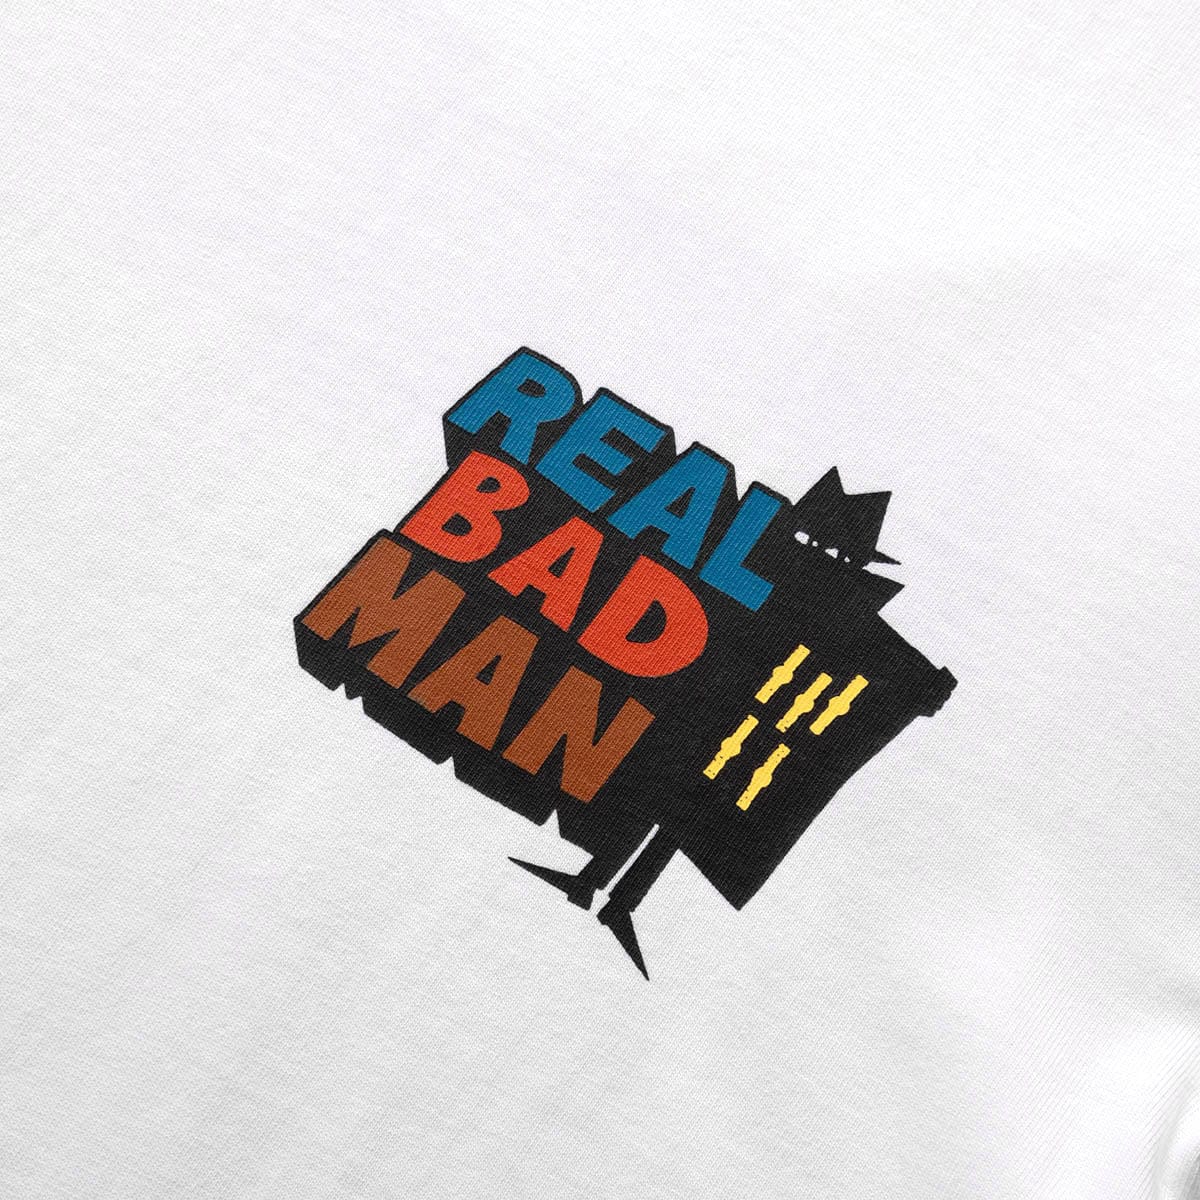 Real Bad Man T-Shirts RBM LOG T-SHIRT VOL 12